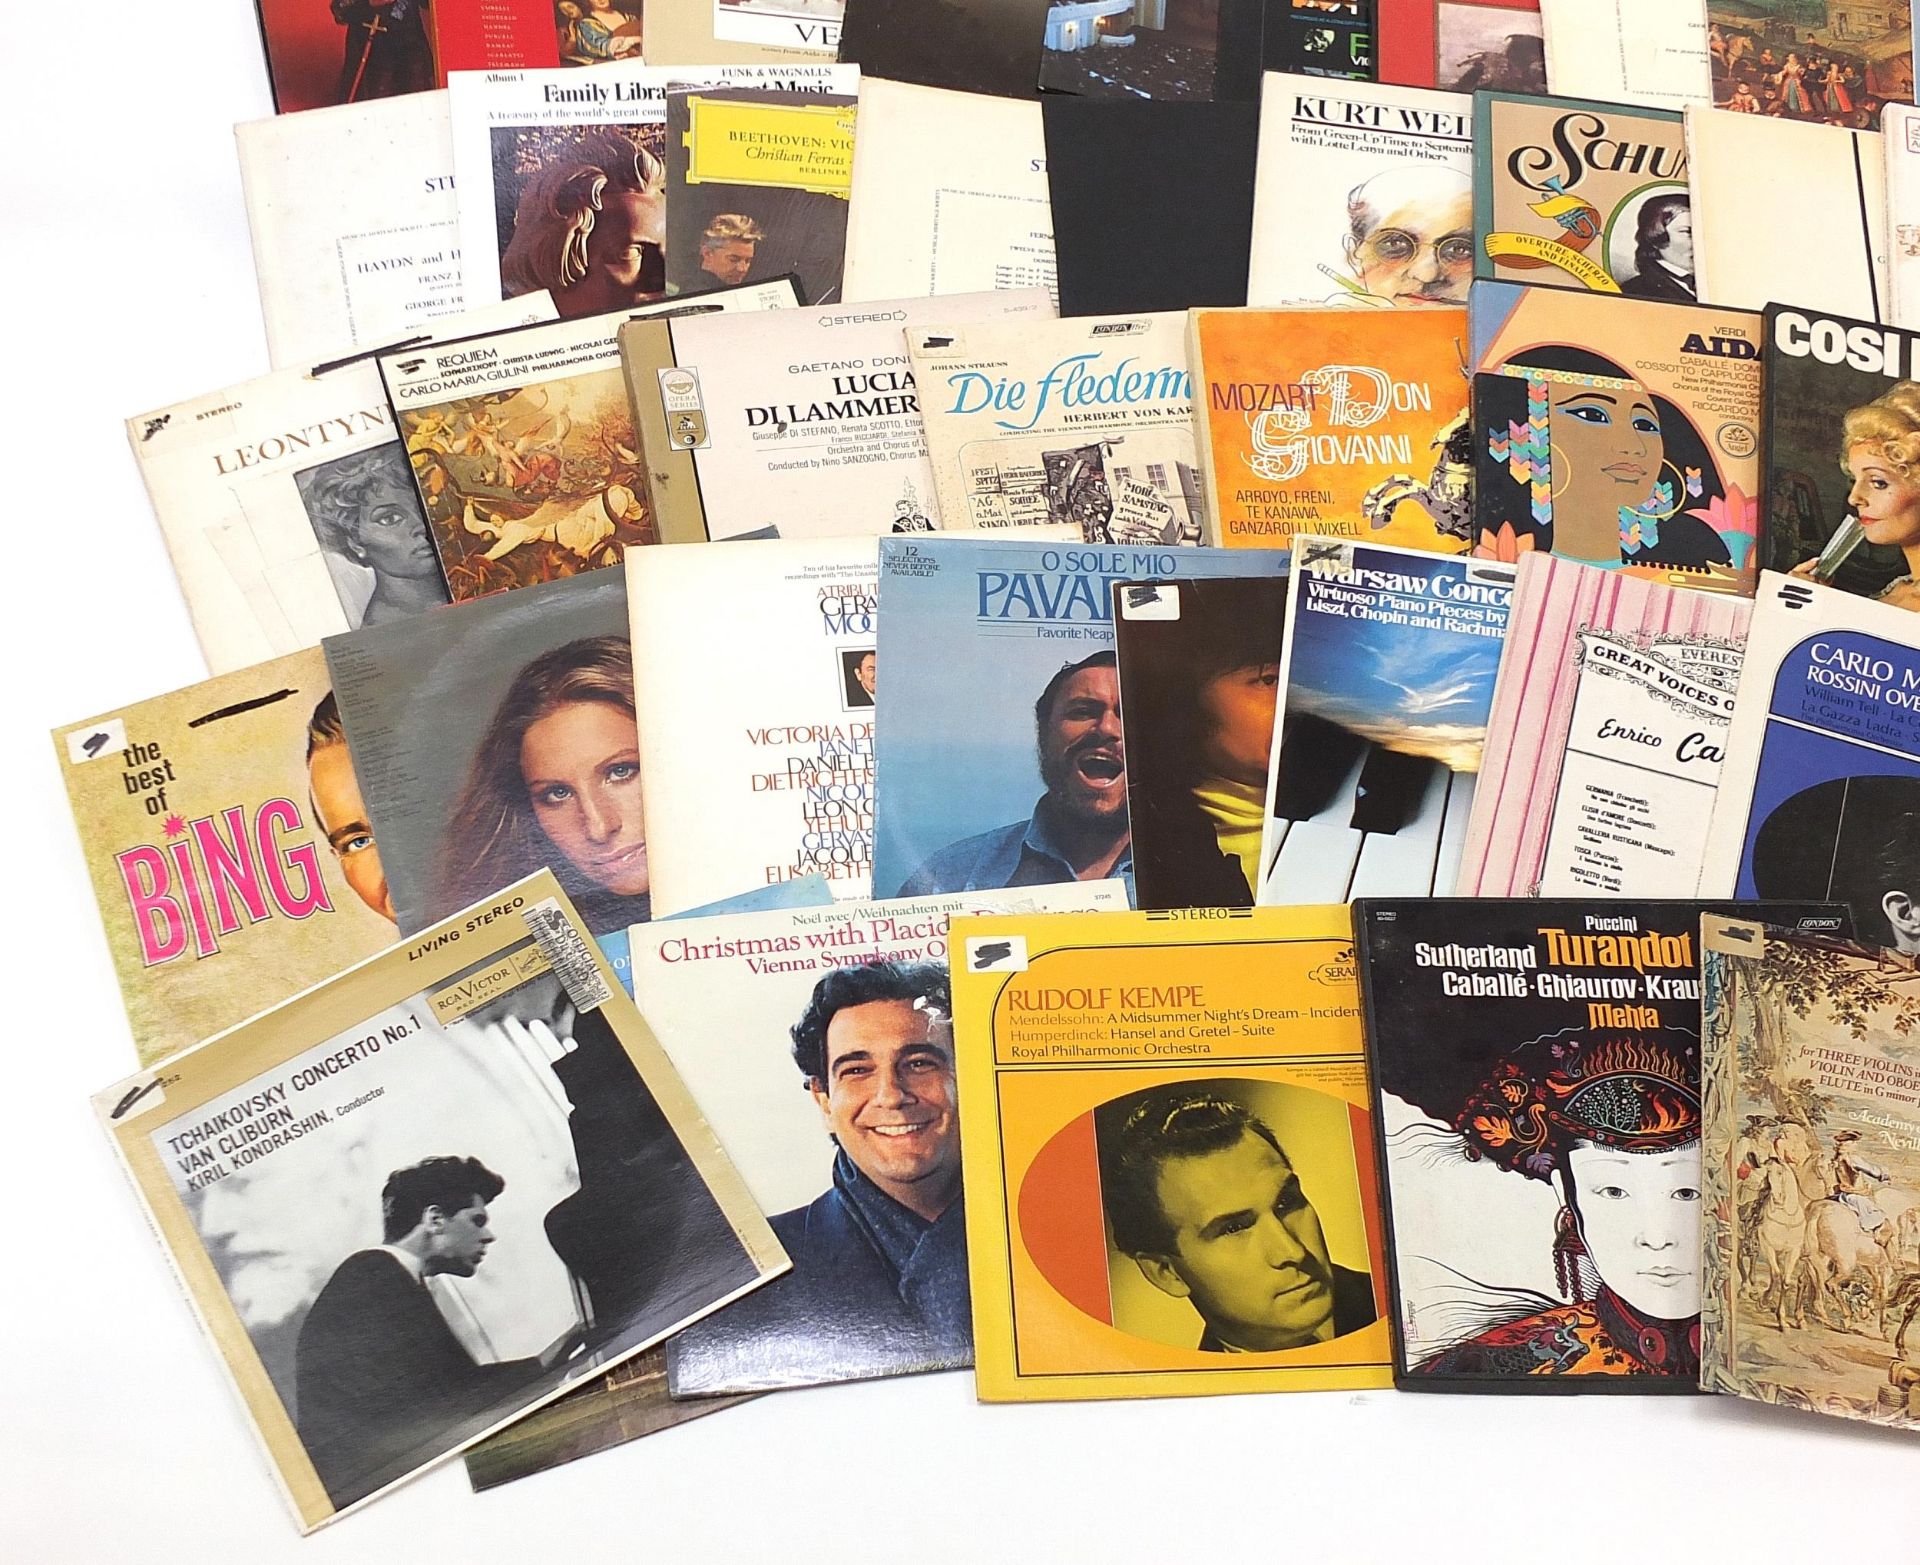 Vinyl LP's, including box sets, opera, Don Giovani and Pavarotti - Image 4 of 5